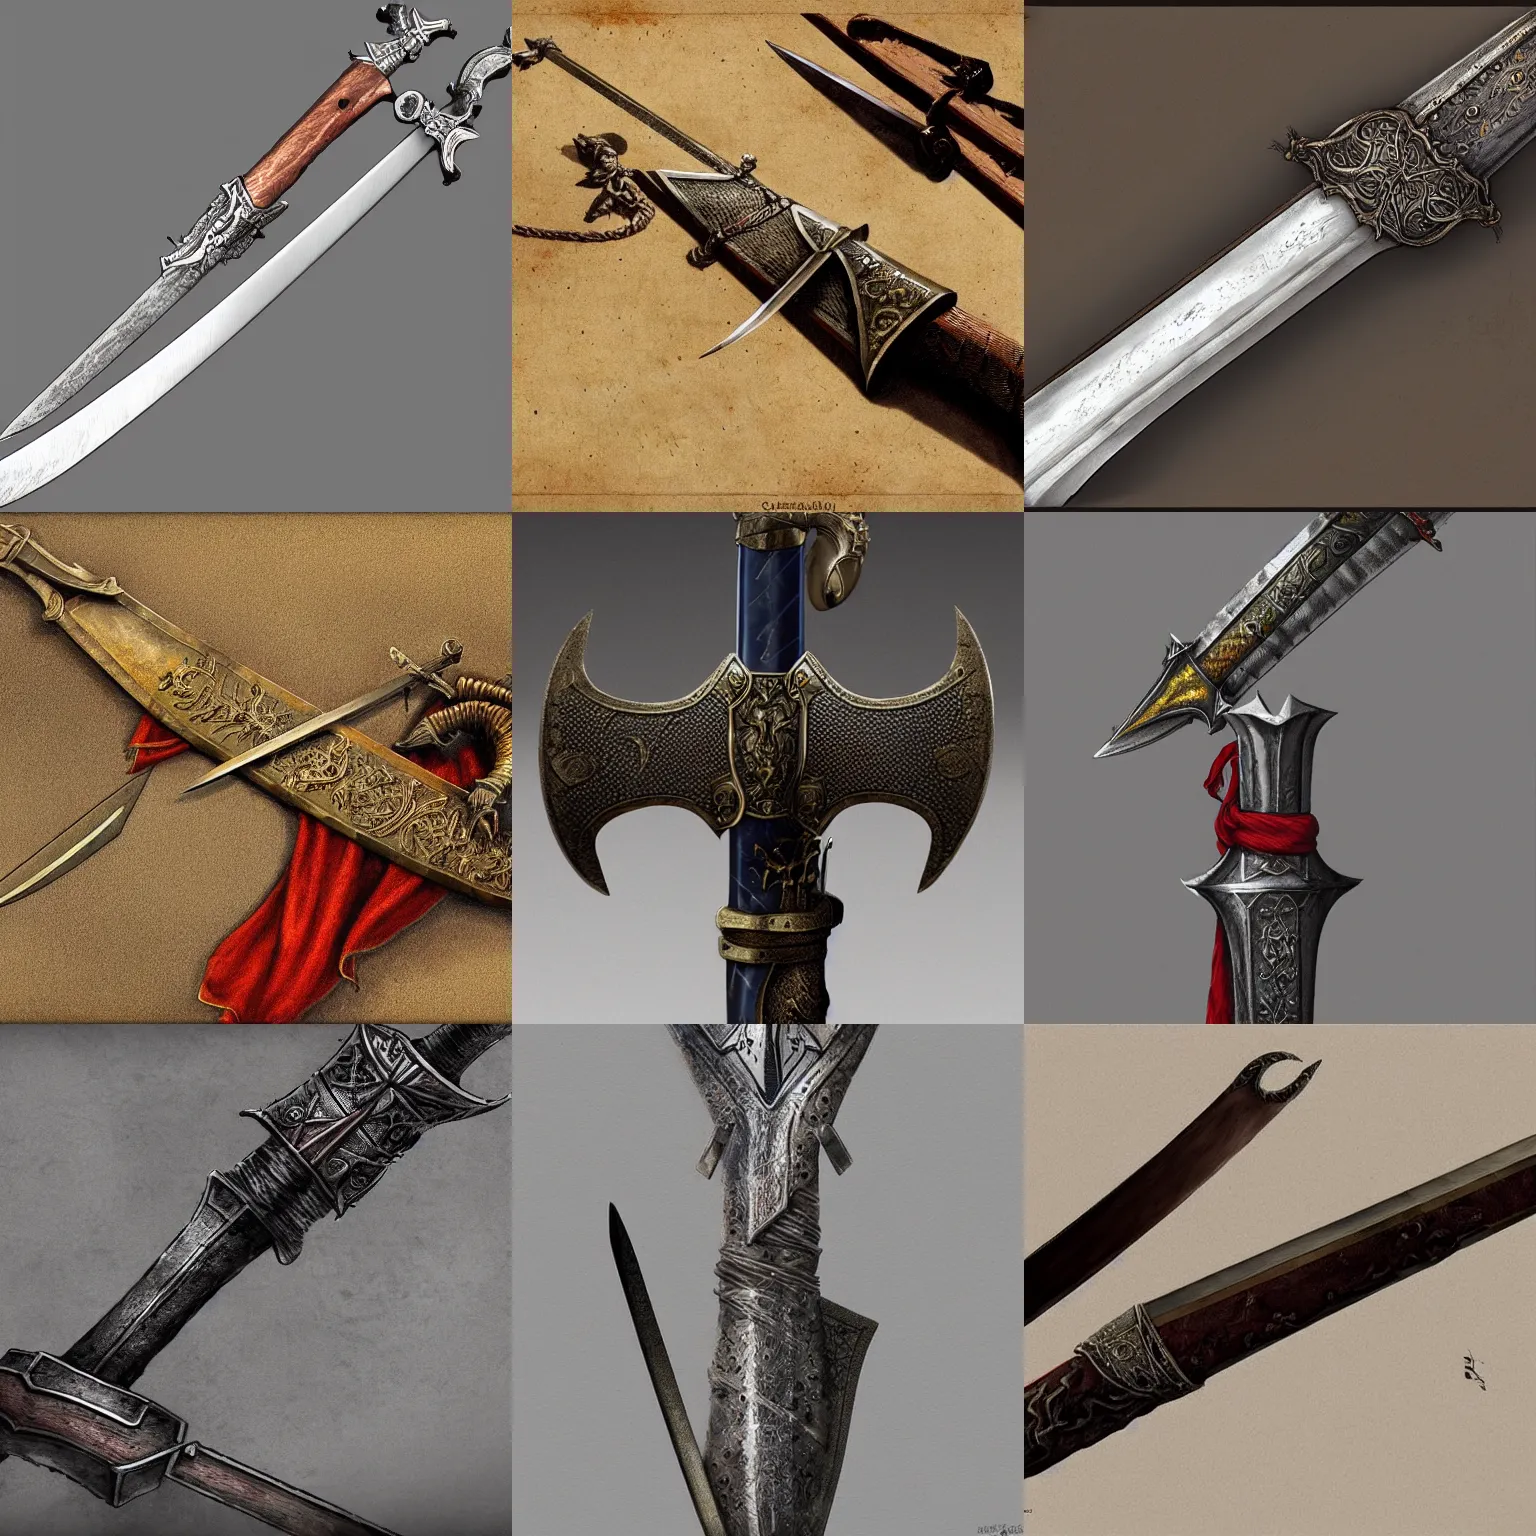 Prompt: medieval sword in hand, highly detailed, artstation, concept art, sharp focus, rutkoswki, jurgens, grelin